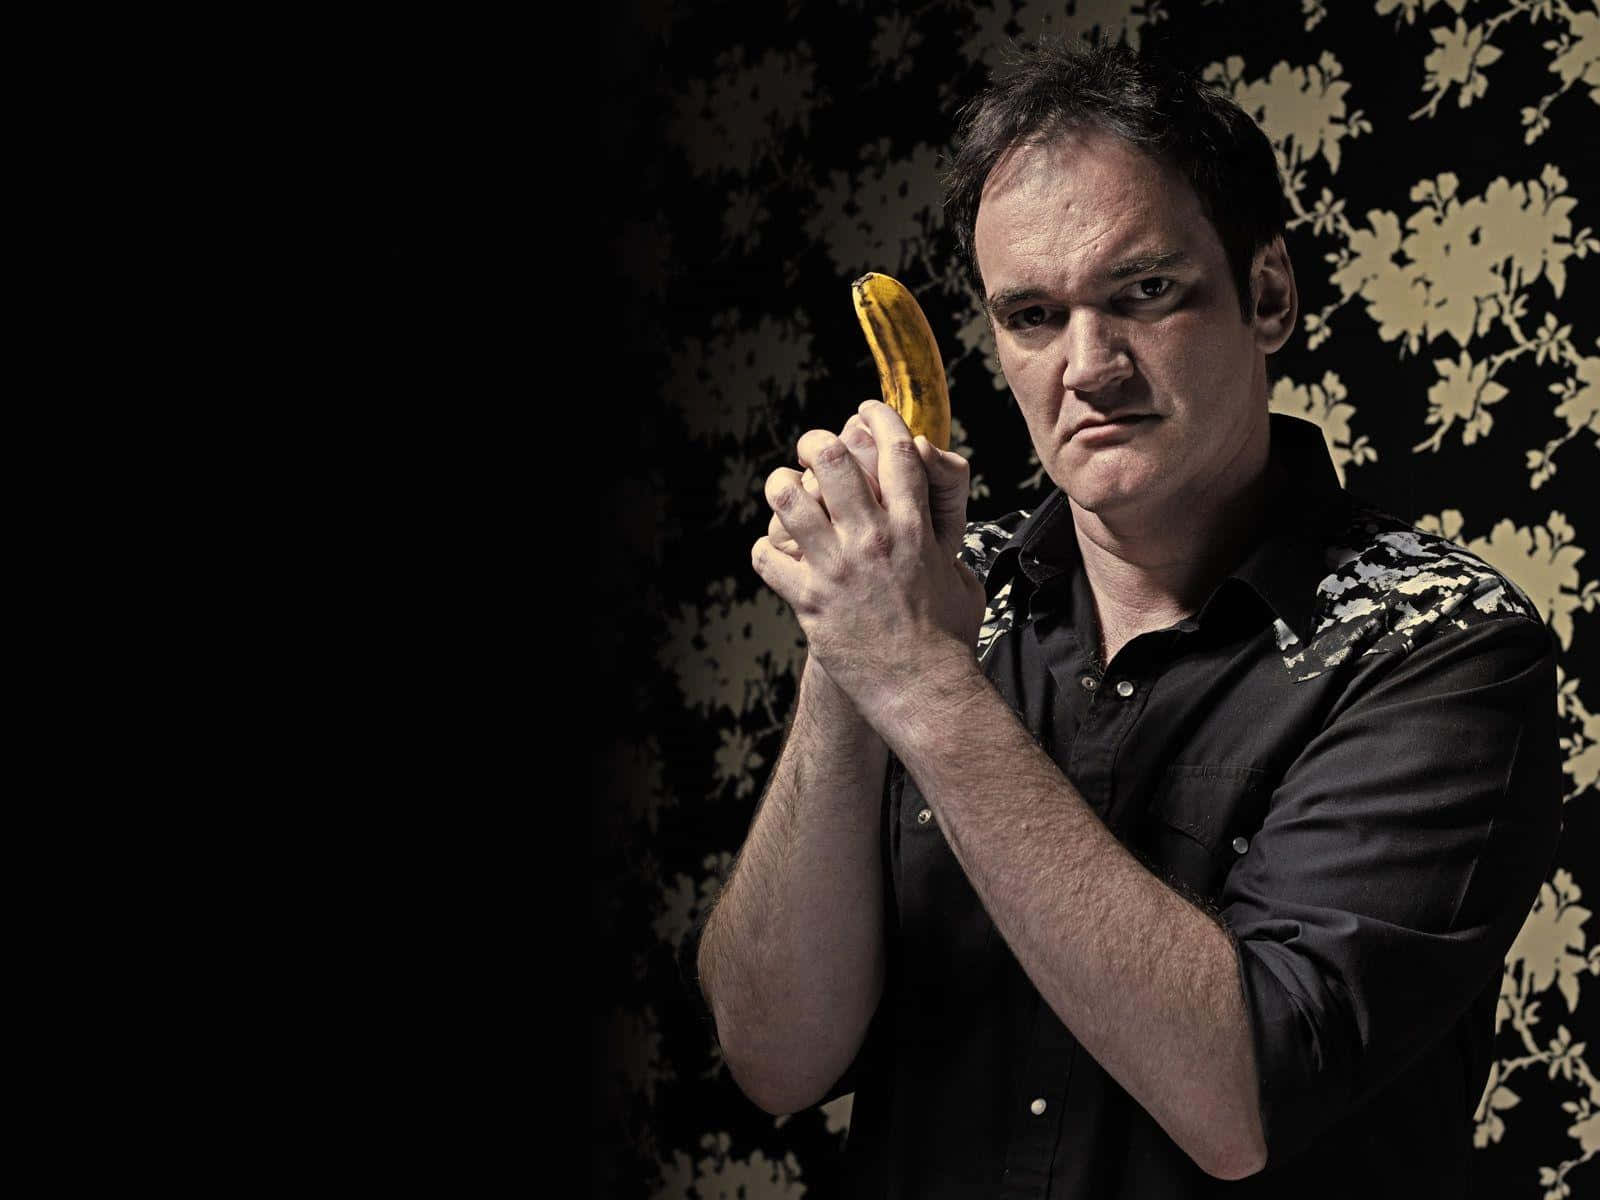 Quentin_ Tarantino_ Holding_ Banana Wallpaper